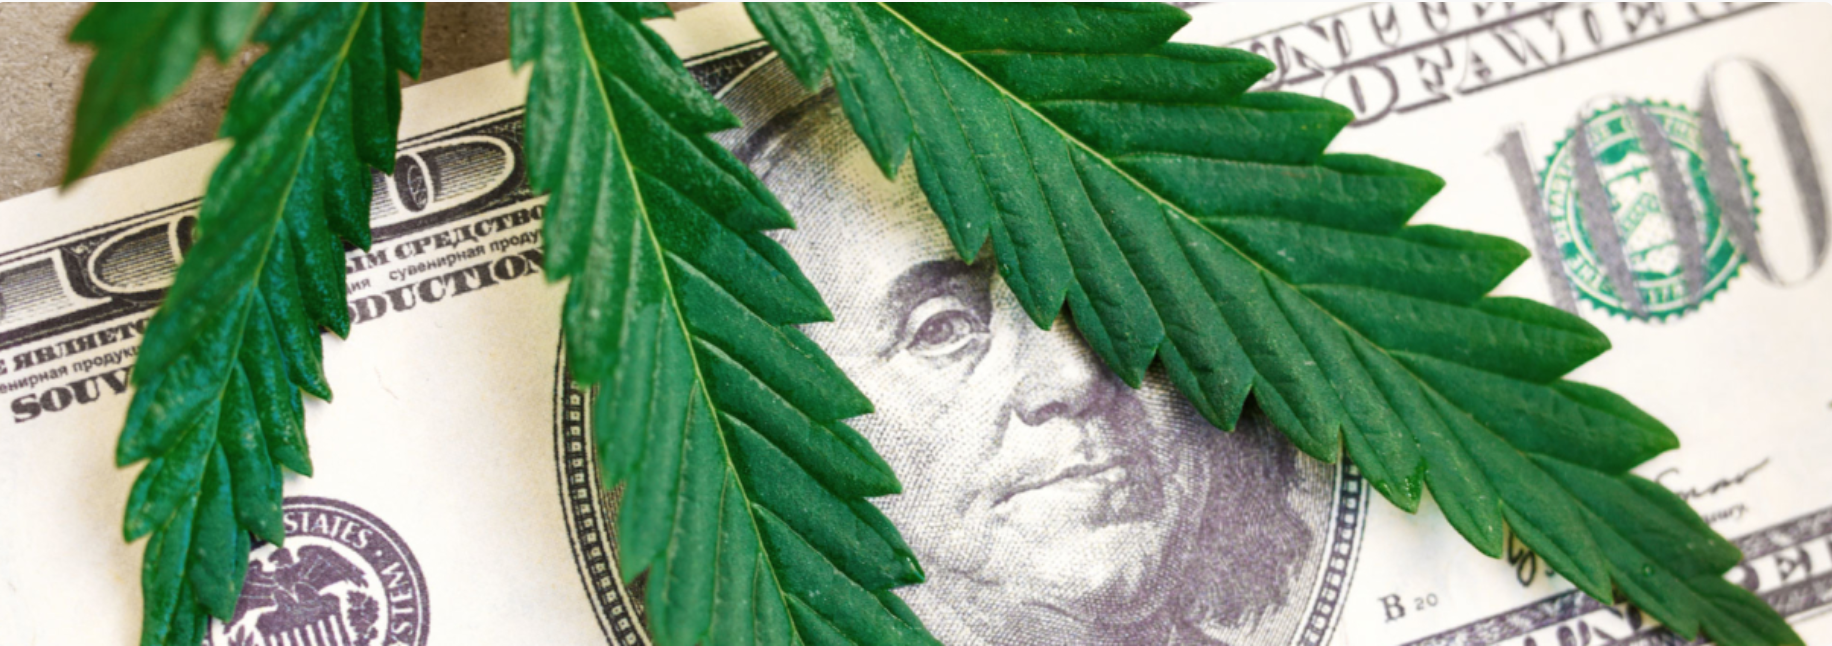 plant patents cannabis